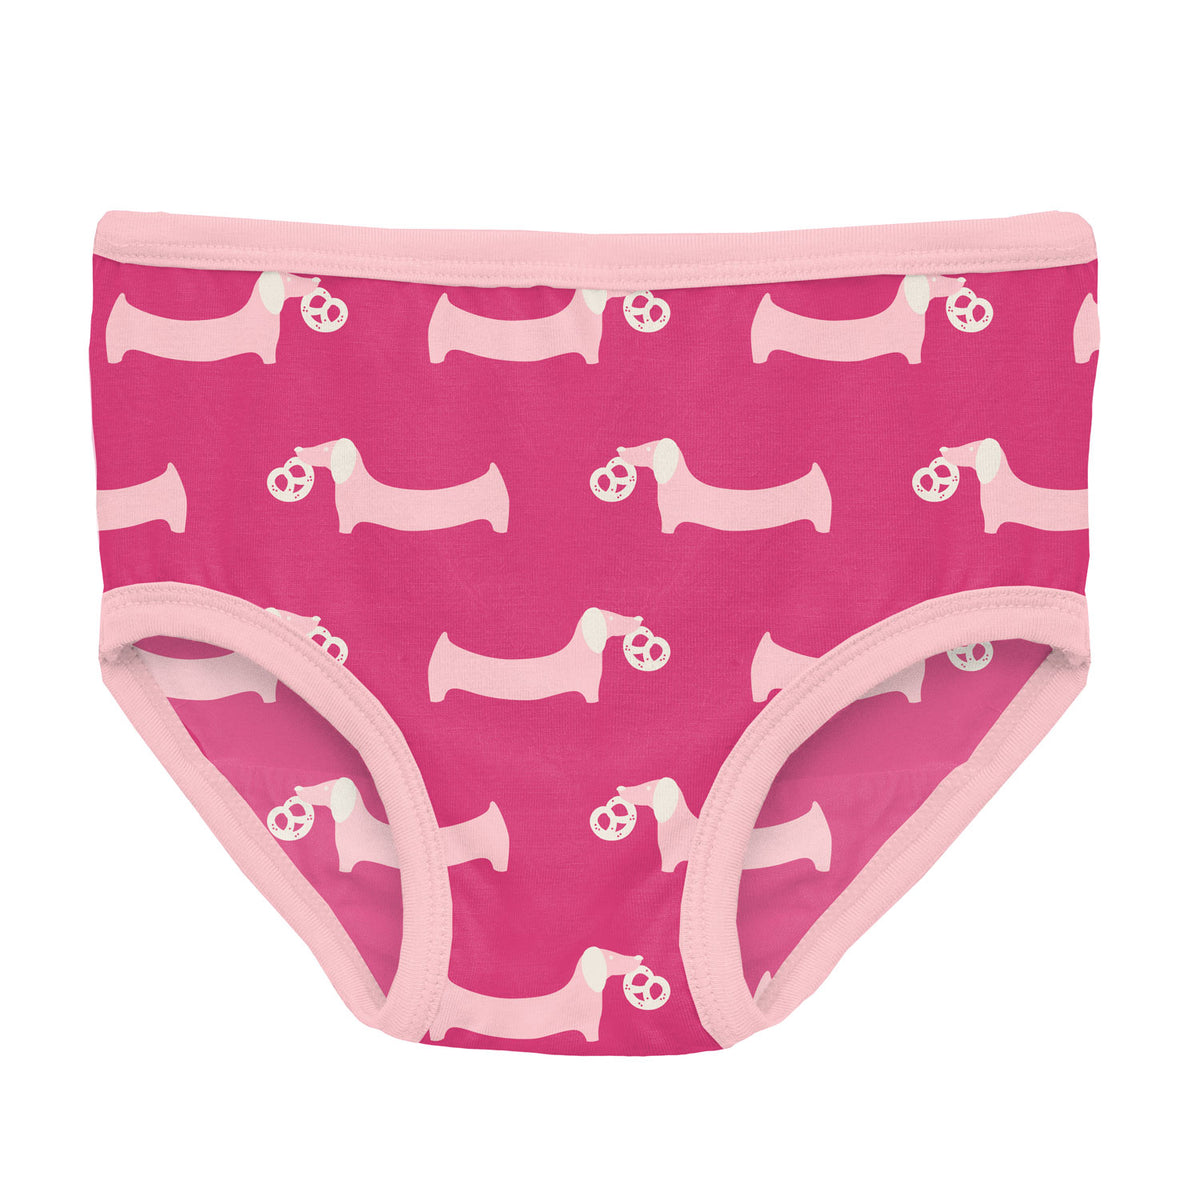 Kickee Pants Bamboo Girls Underwear - Flamingo Argyle